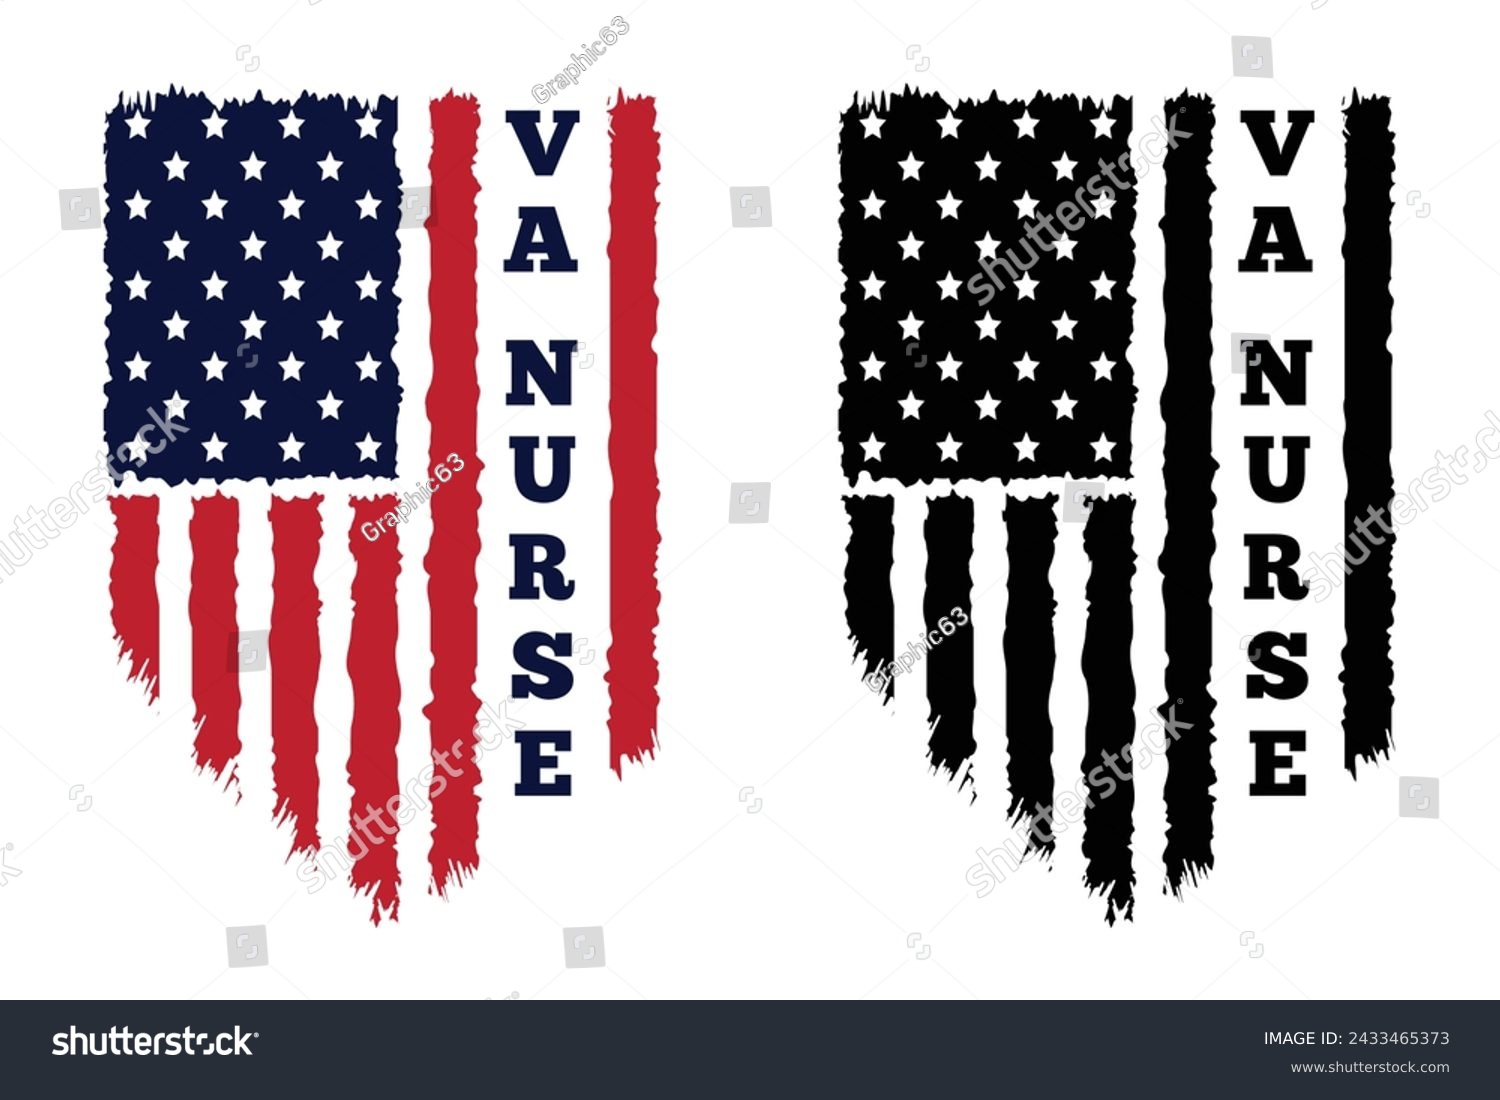 SVG of Va Nurse Typography Vector. Nurse Distressed American Flag Print For t Shirt,Poster,backround,Banner New Design. svg